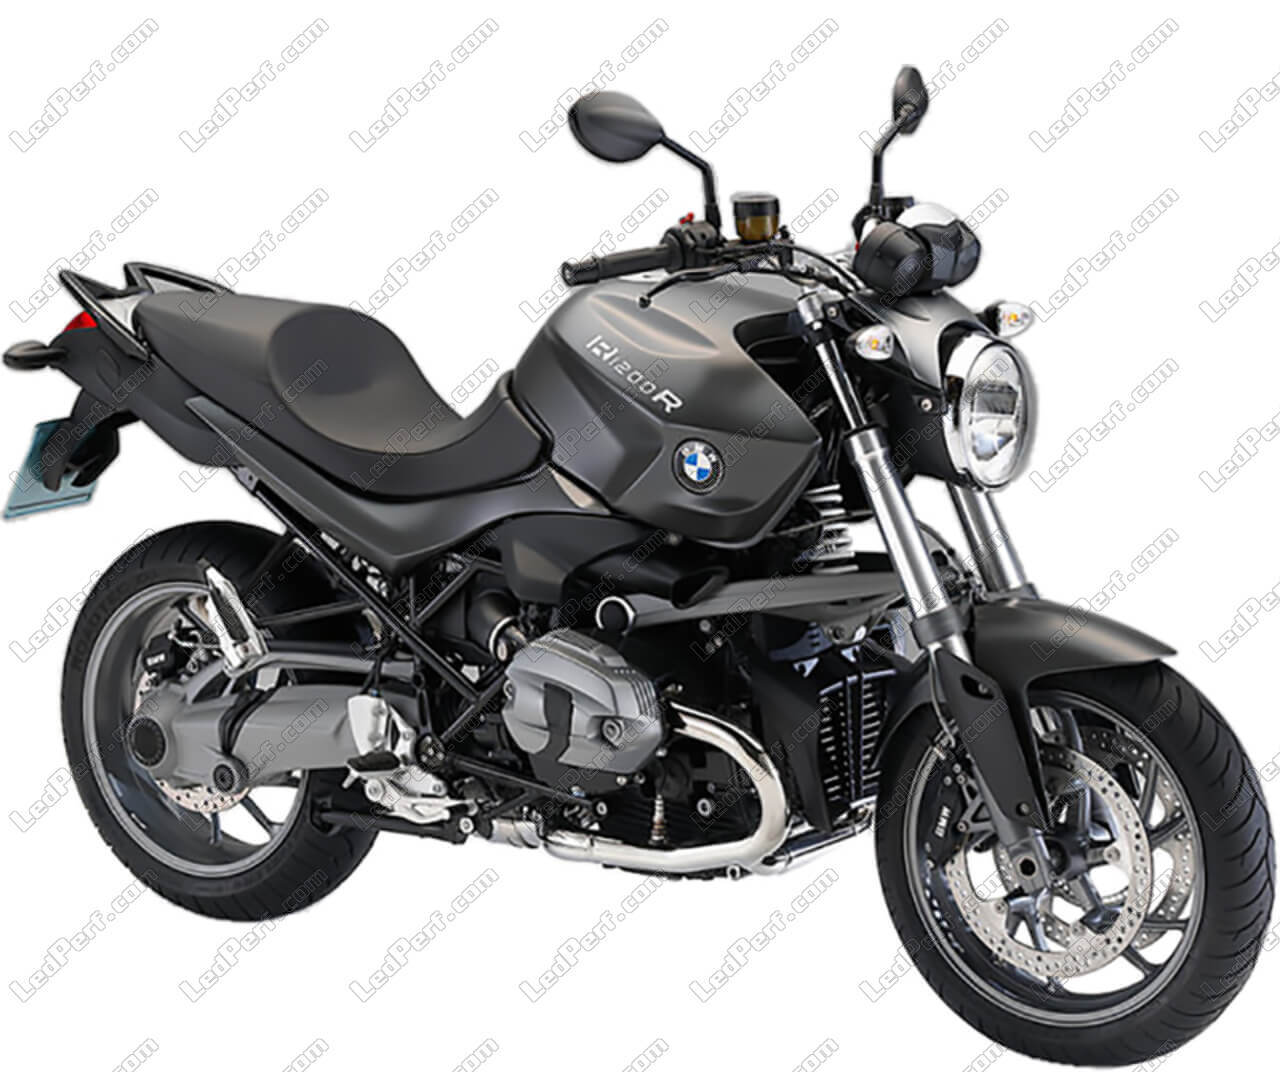 https://www.ledperf.us/images/models/ledperf.com/._1/led-headlight-for-bmw-motorrad-r-1200-r-2010-2014-round-motorcycle-optics-approved_63890.jpg